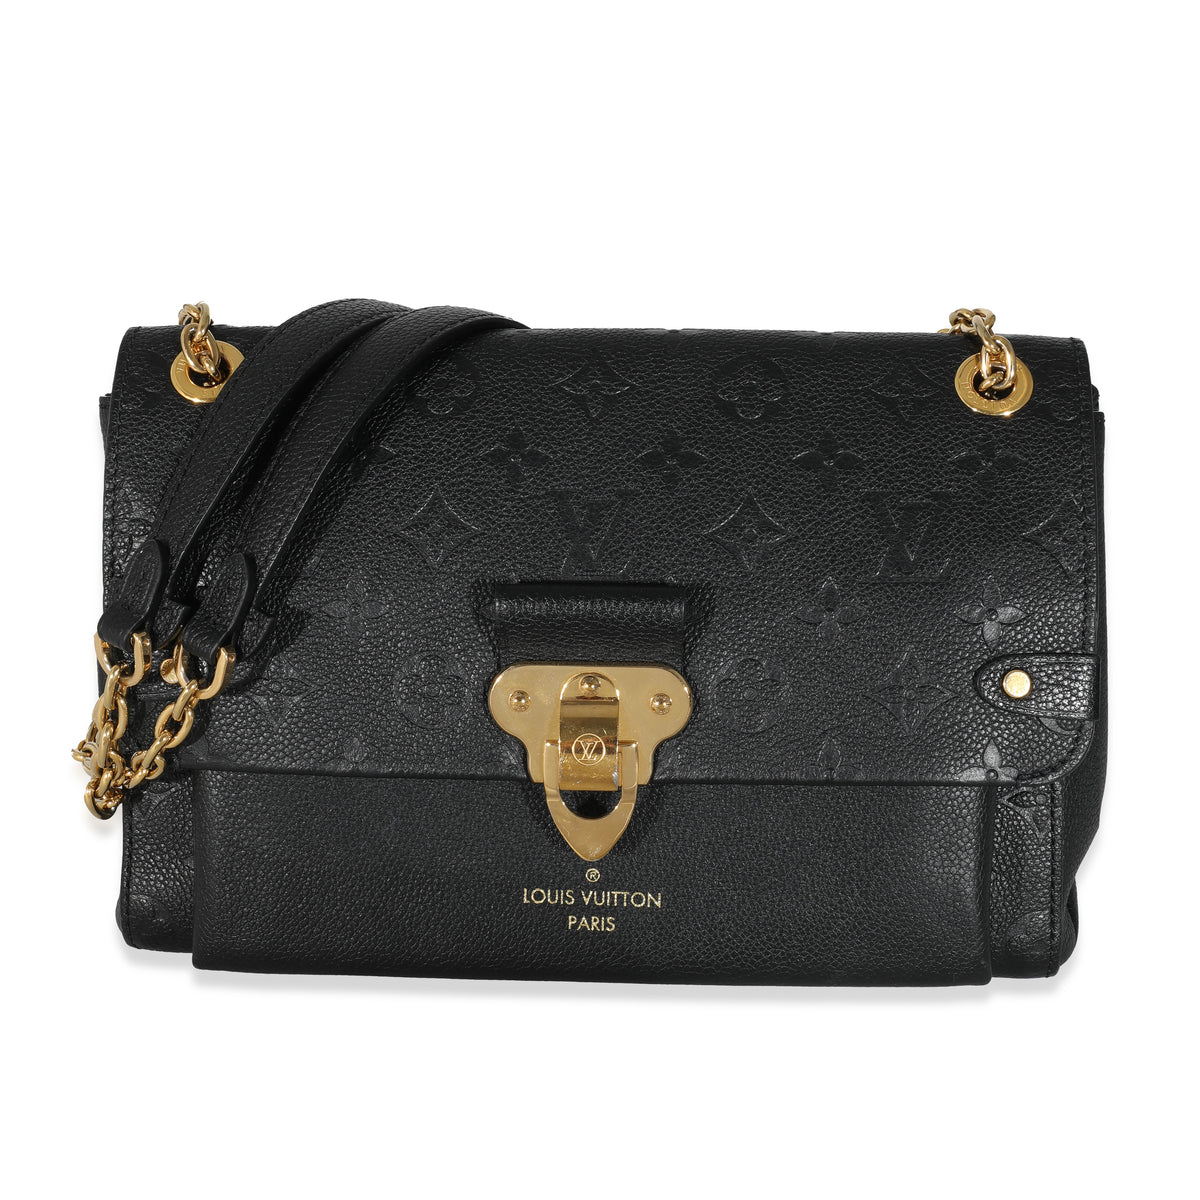 Louis Vuitton Black Empreinte Vavin BB Gold Hardware Available For